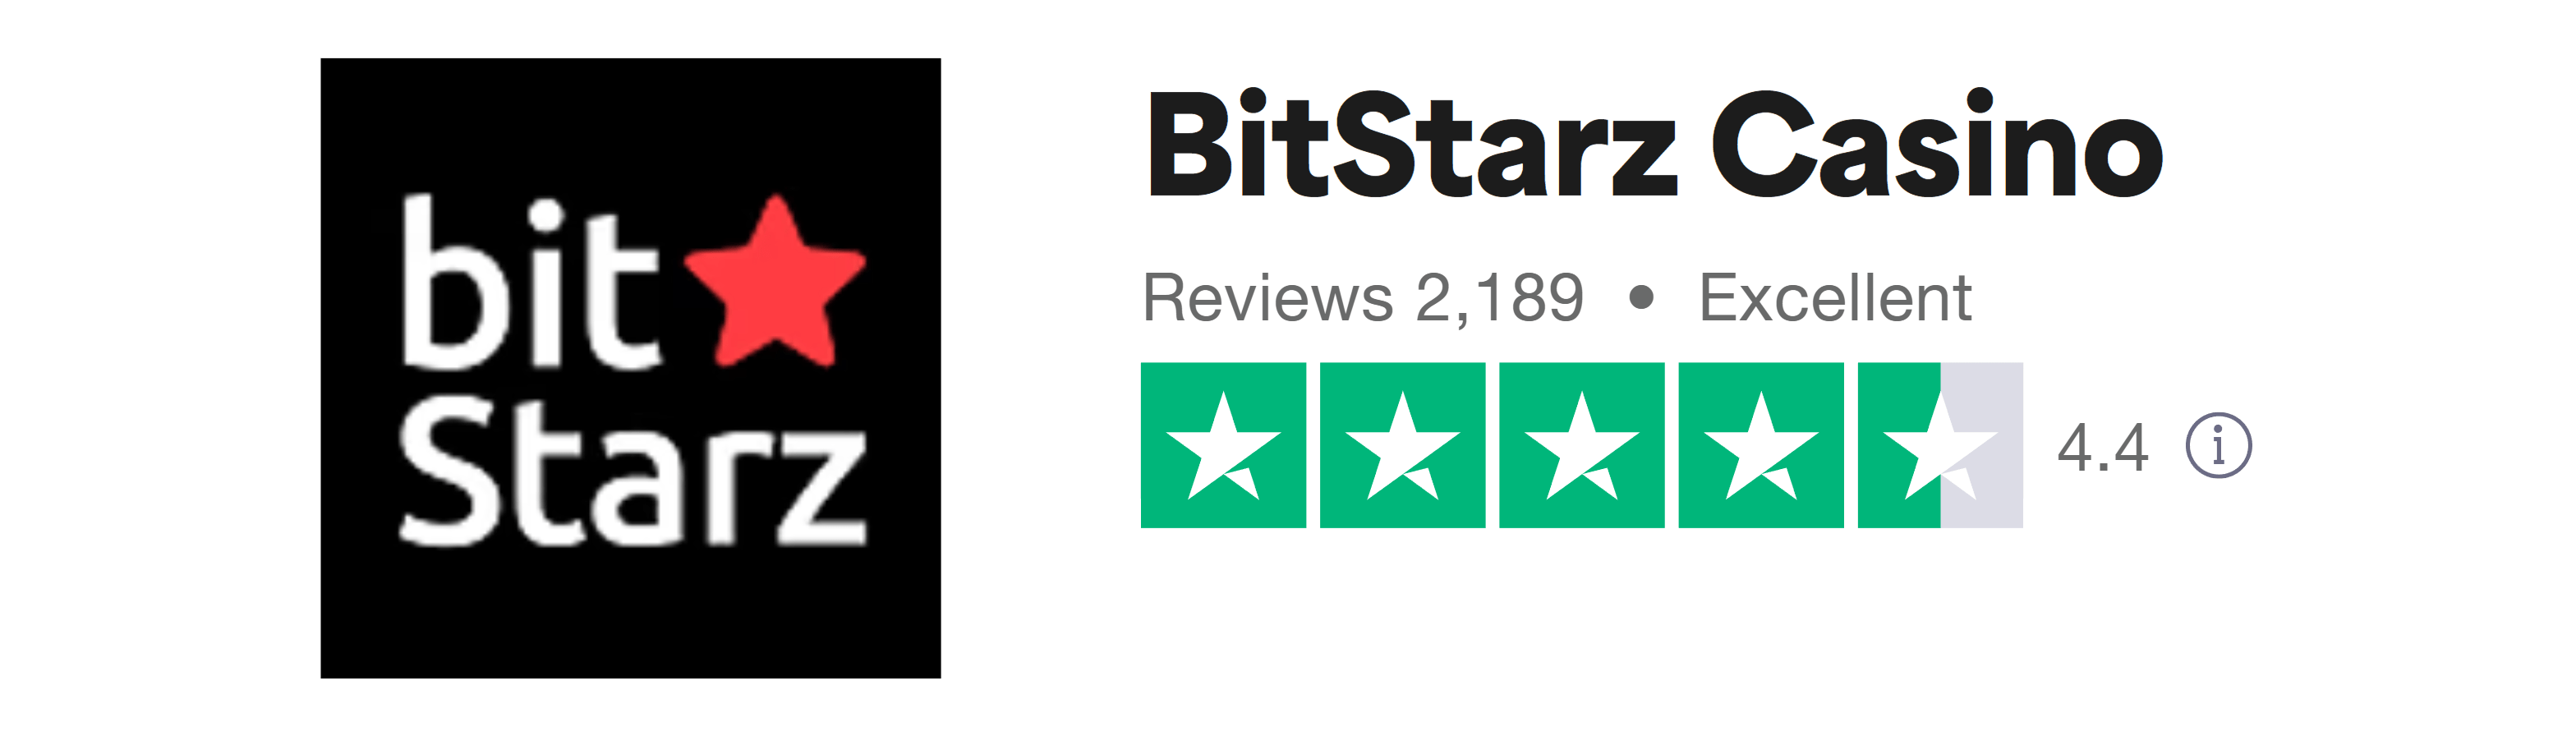 Trustpilot rating screenshot for the BitStarz